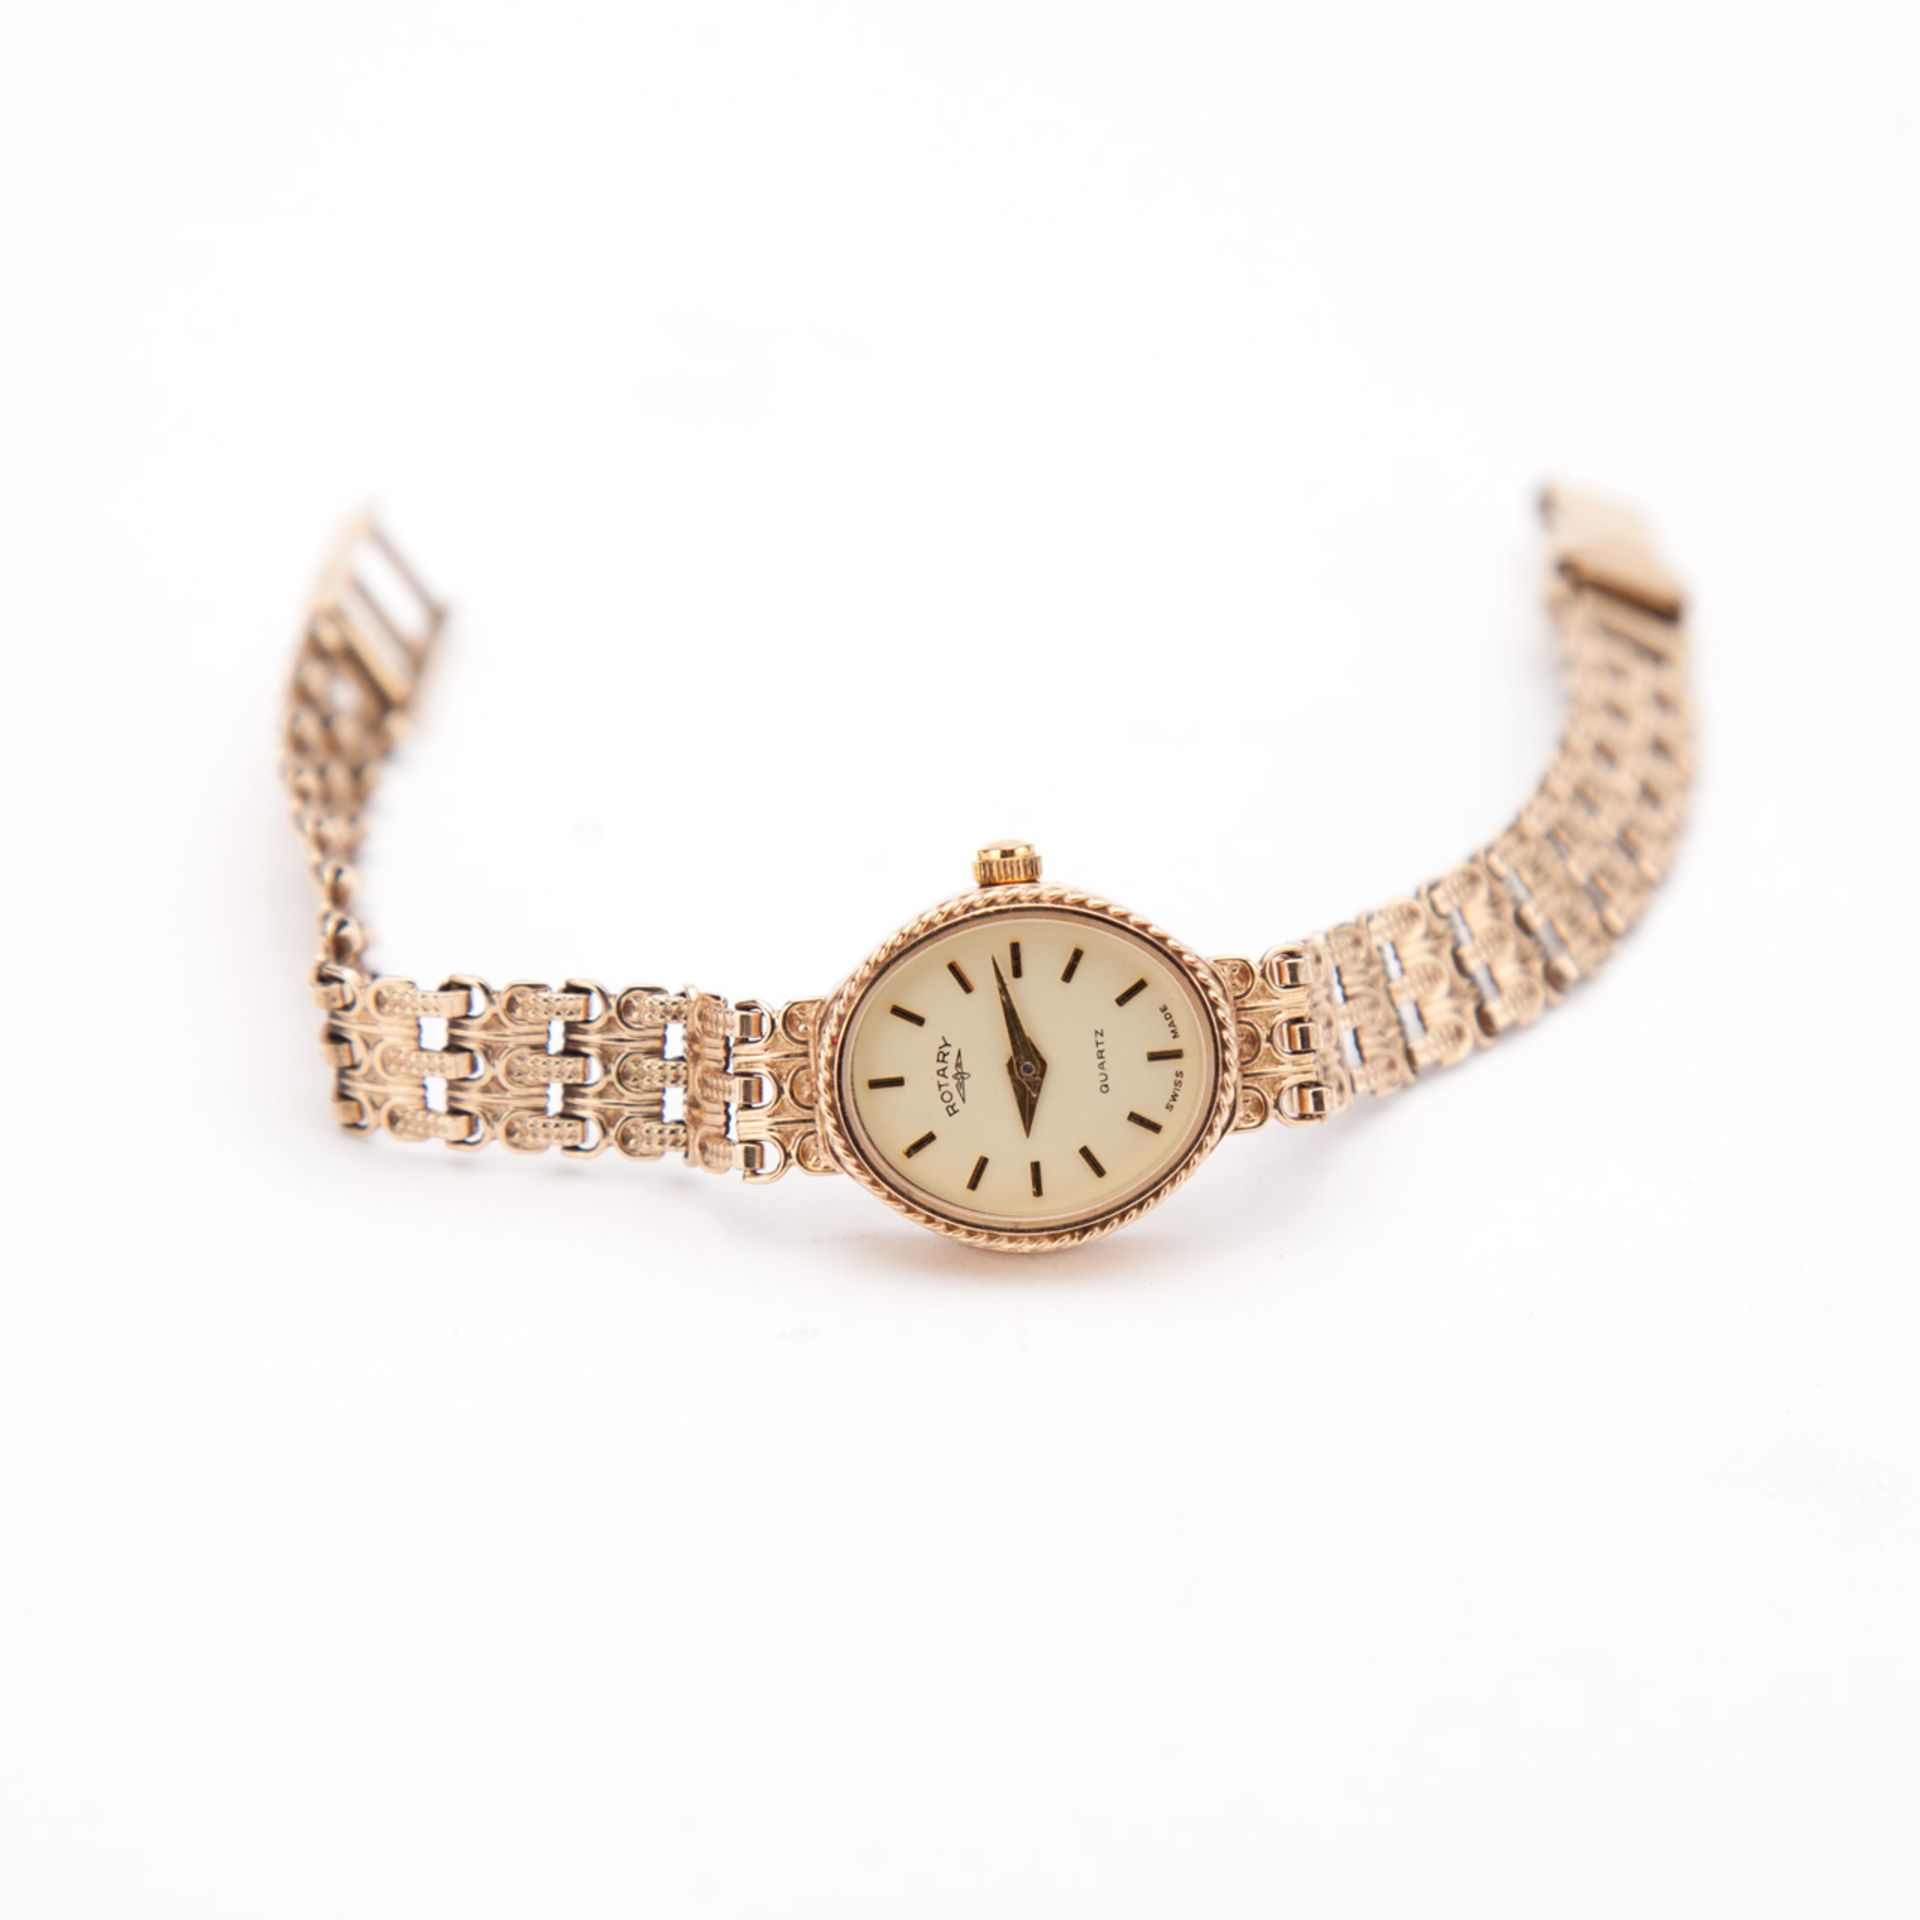 Ladies Rotary Watch - Watch Length 6.75"